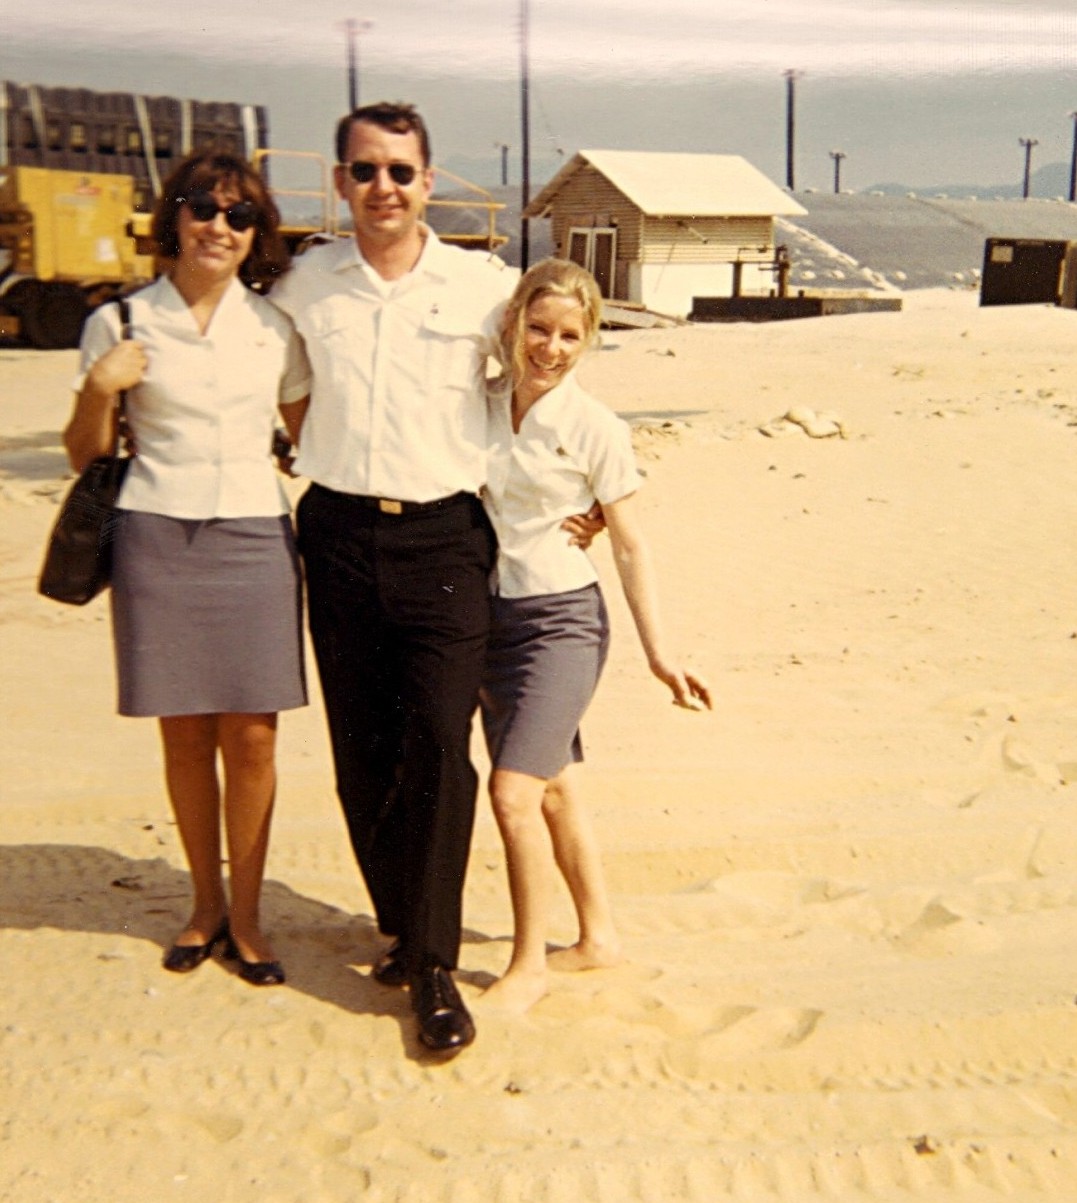 1968 The beach at Cam Rahn Bay, Vietnam, Maureen van Leeuwen left & fellow crew members pose for photos during a brief transit in support of the Vietnam War effort.